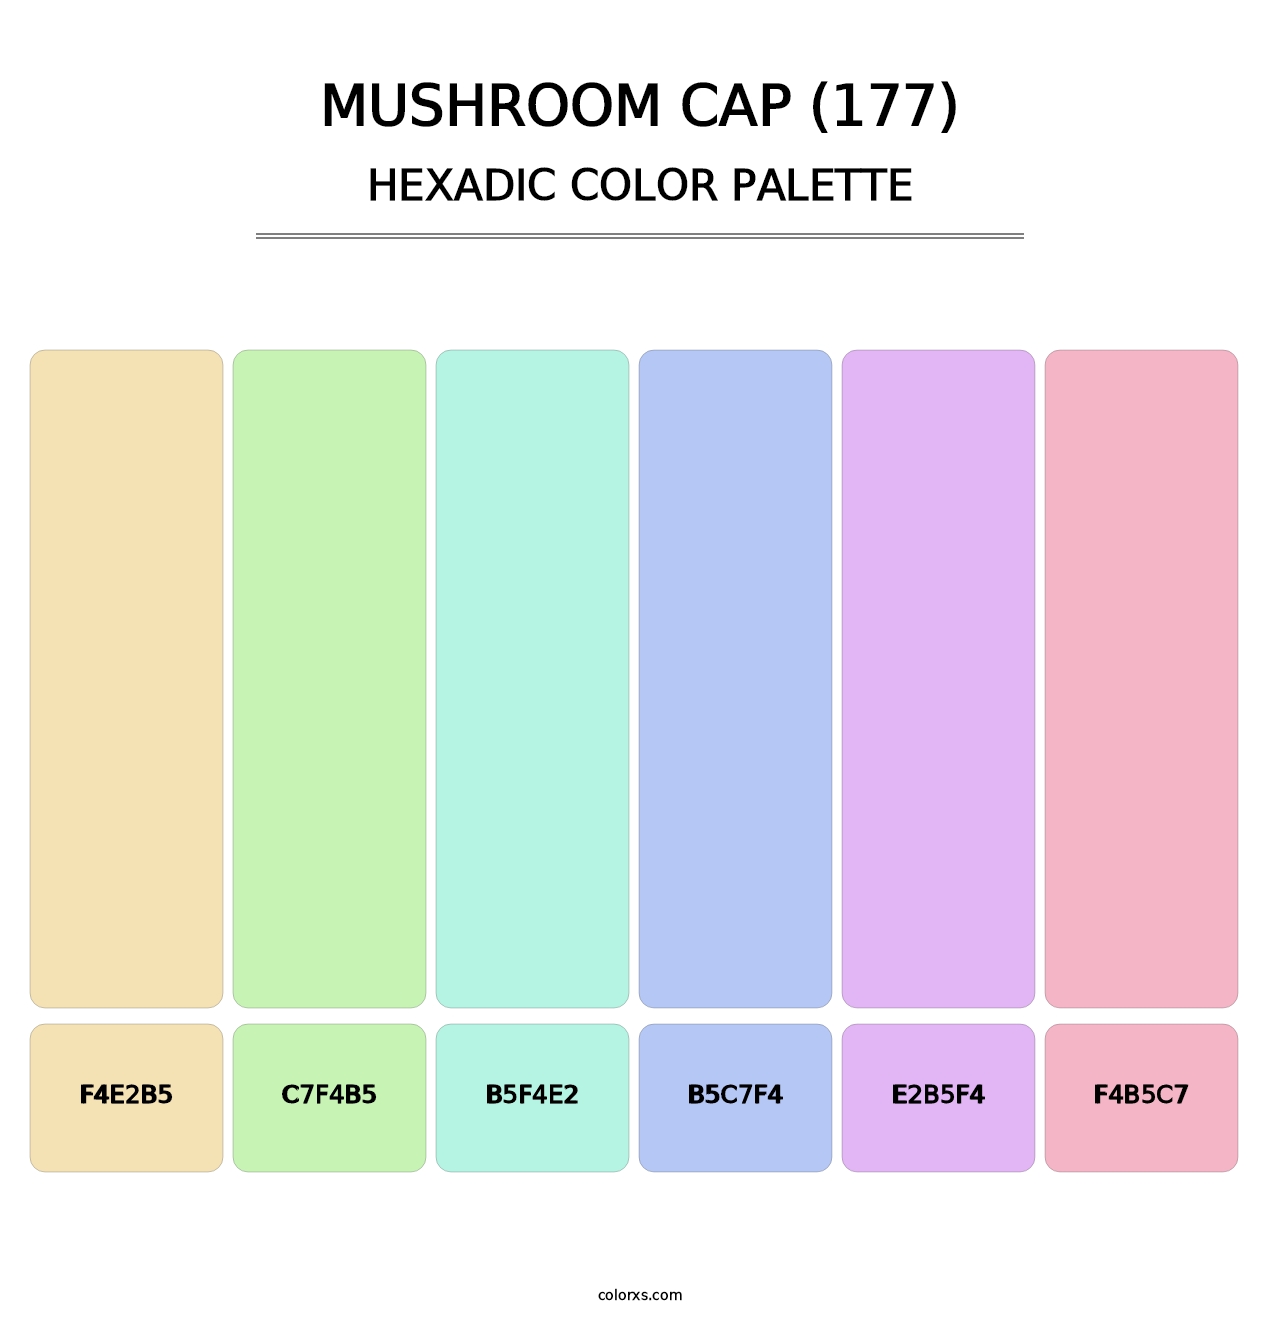 Mushroom Cap (177) - Hexadic Color Palette